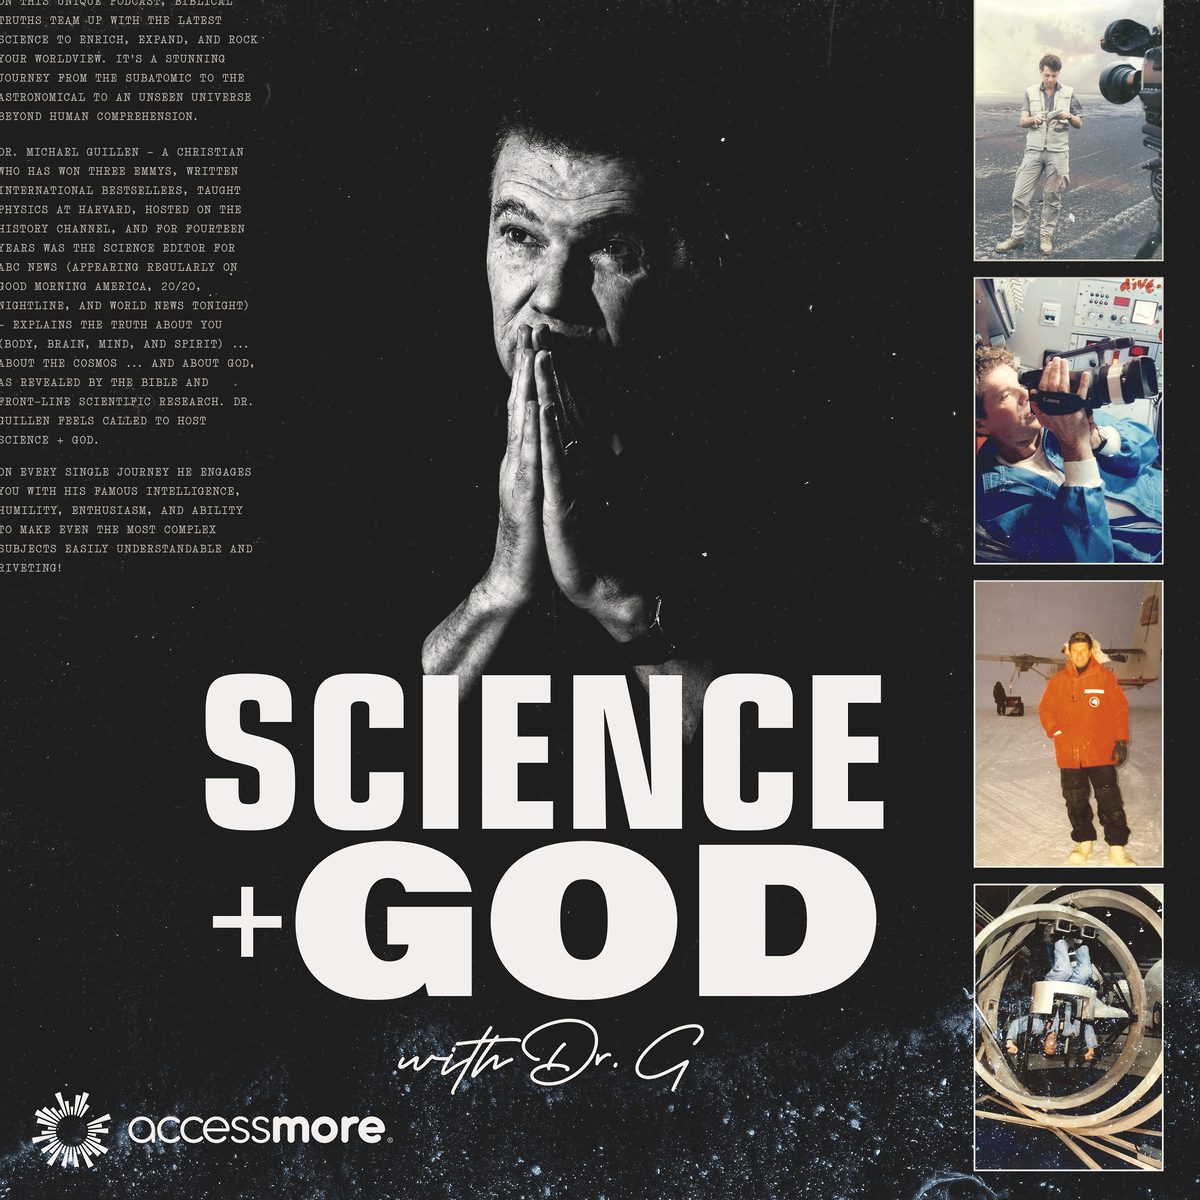 Journey #125 - Science, Doubting Thomas & Childlike Faith